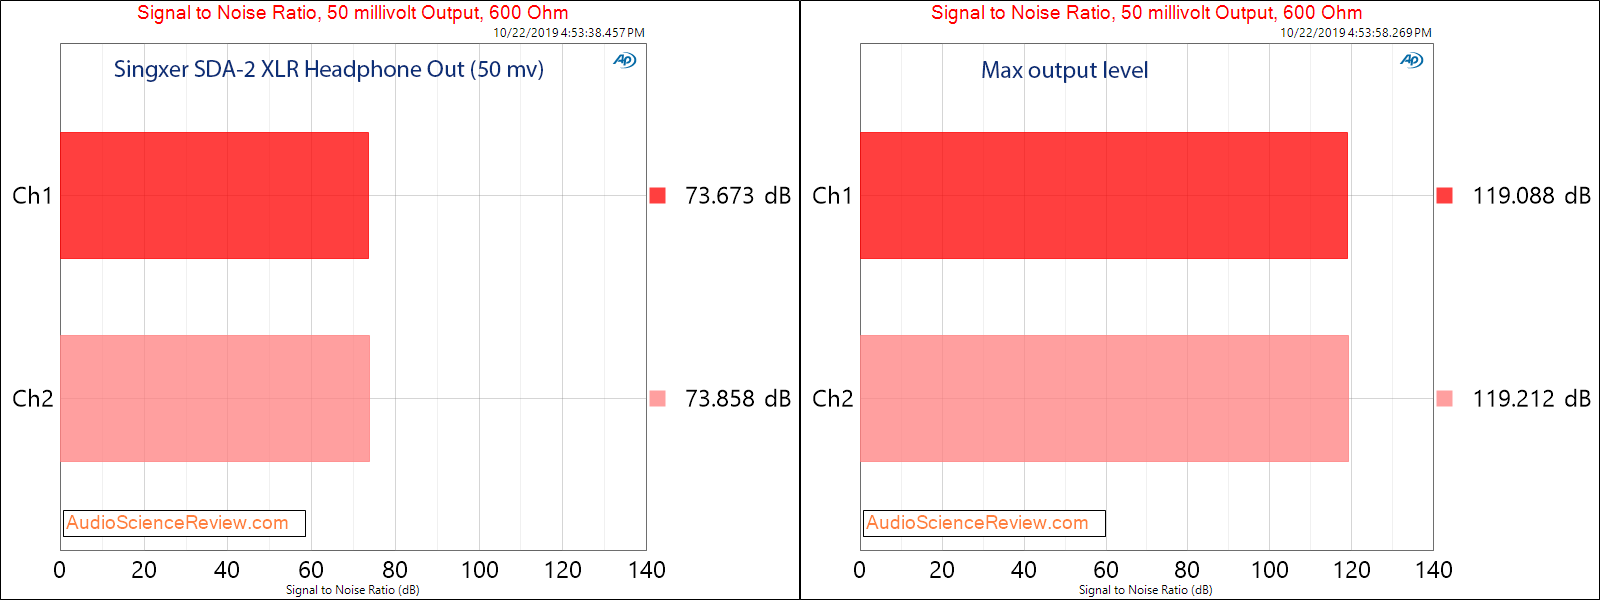 Singxer SDA-2 DAC DAC and Headphone Amplifier SNR Range Measurements.png